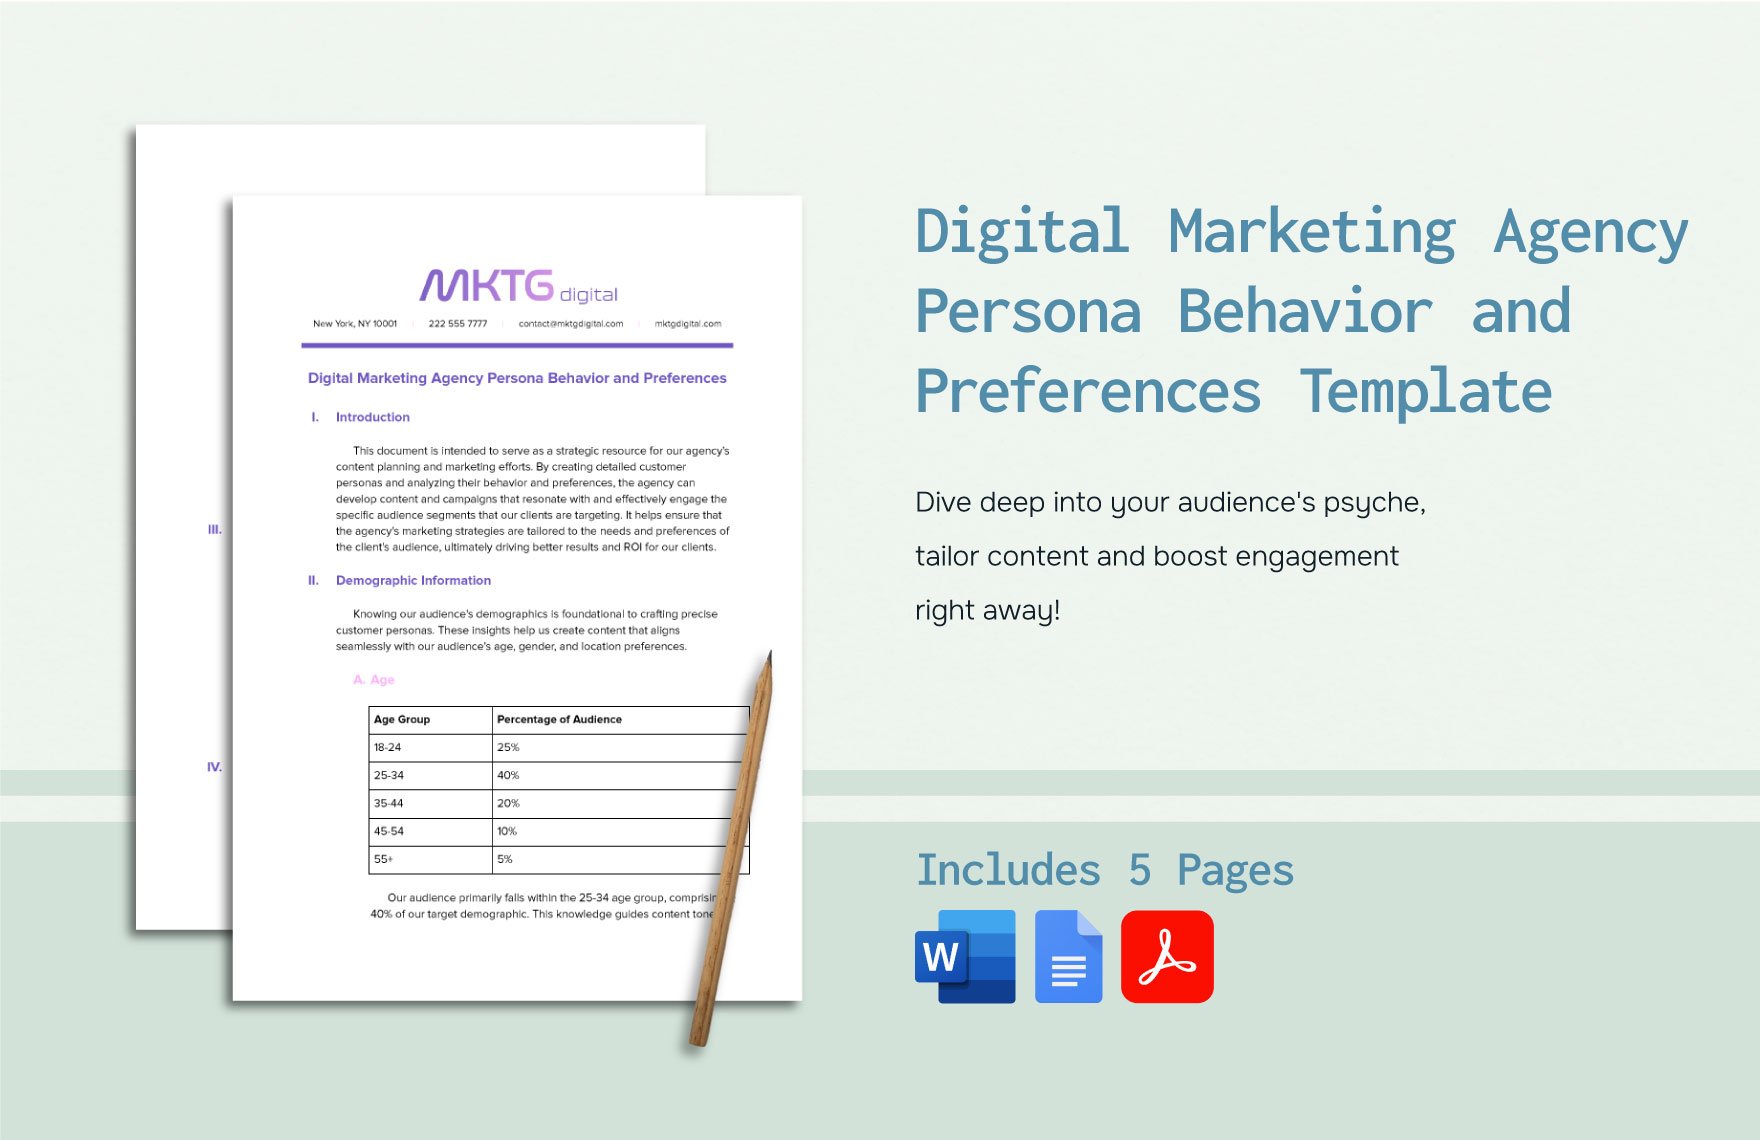 Digital Marketing Agency Persona Behavior and Preferences Template